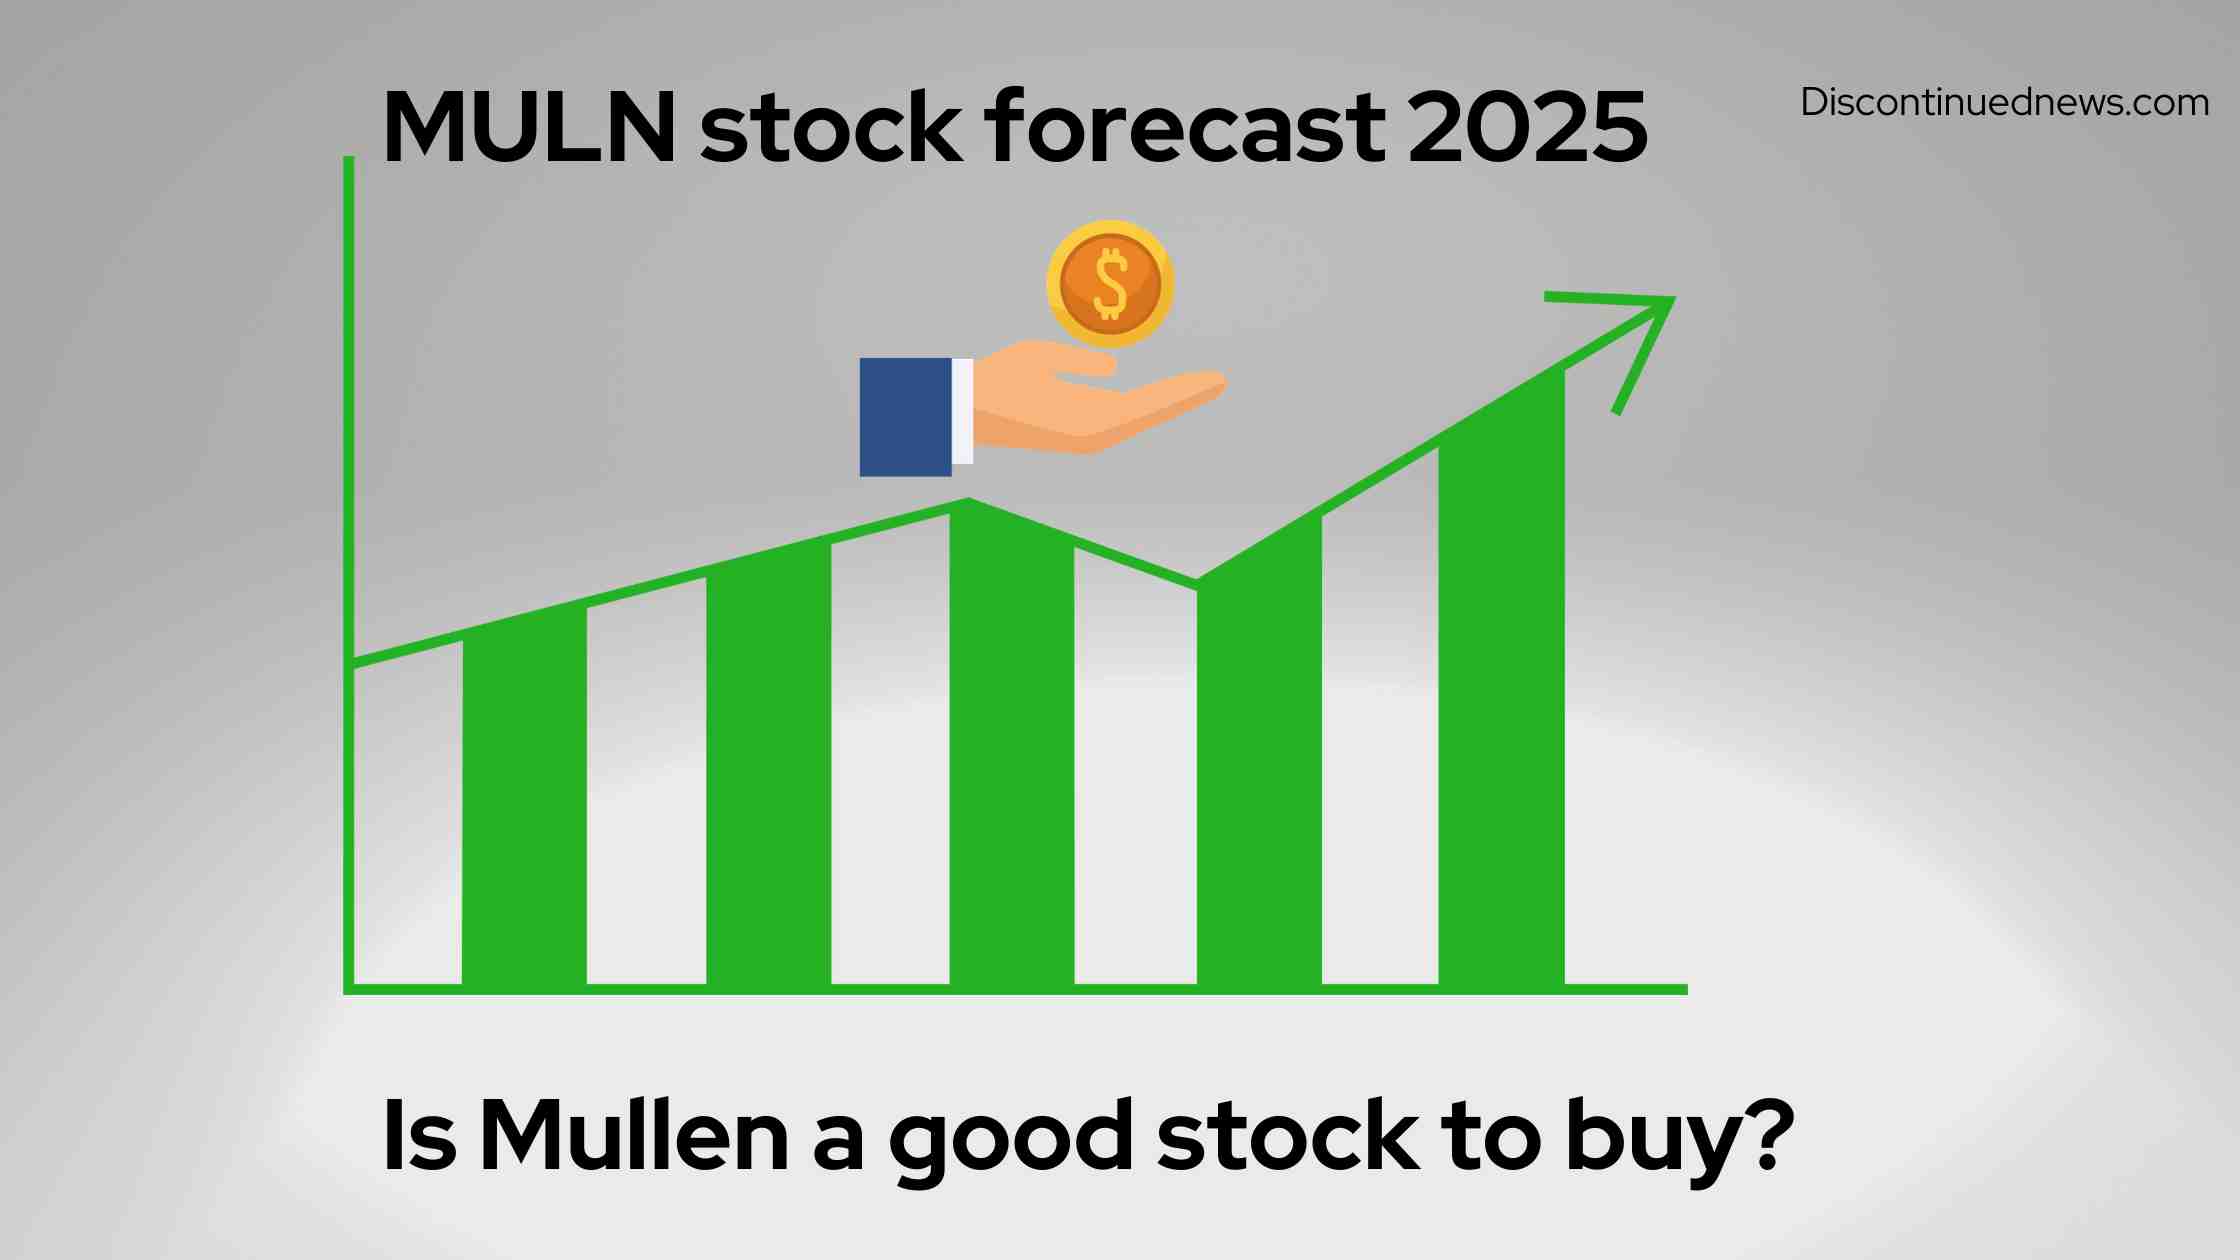 MULN stock forecast 2025